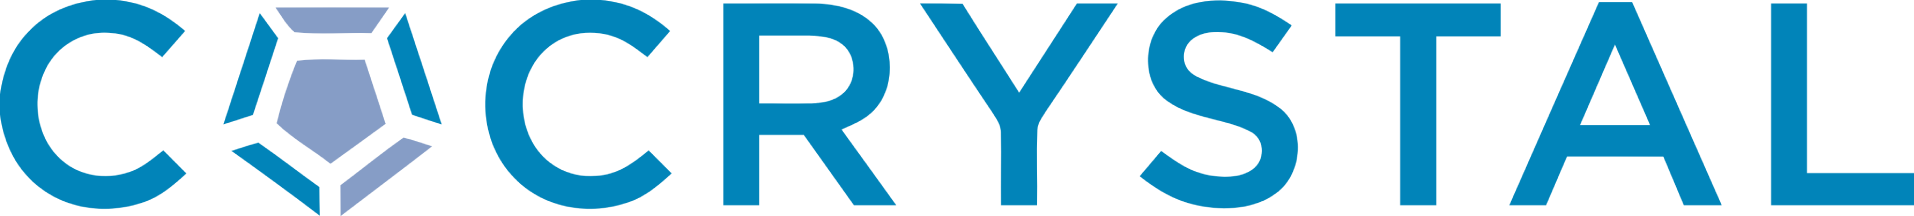 Cocrystal Pharma
 logo large (transparent PNG)